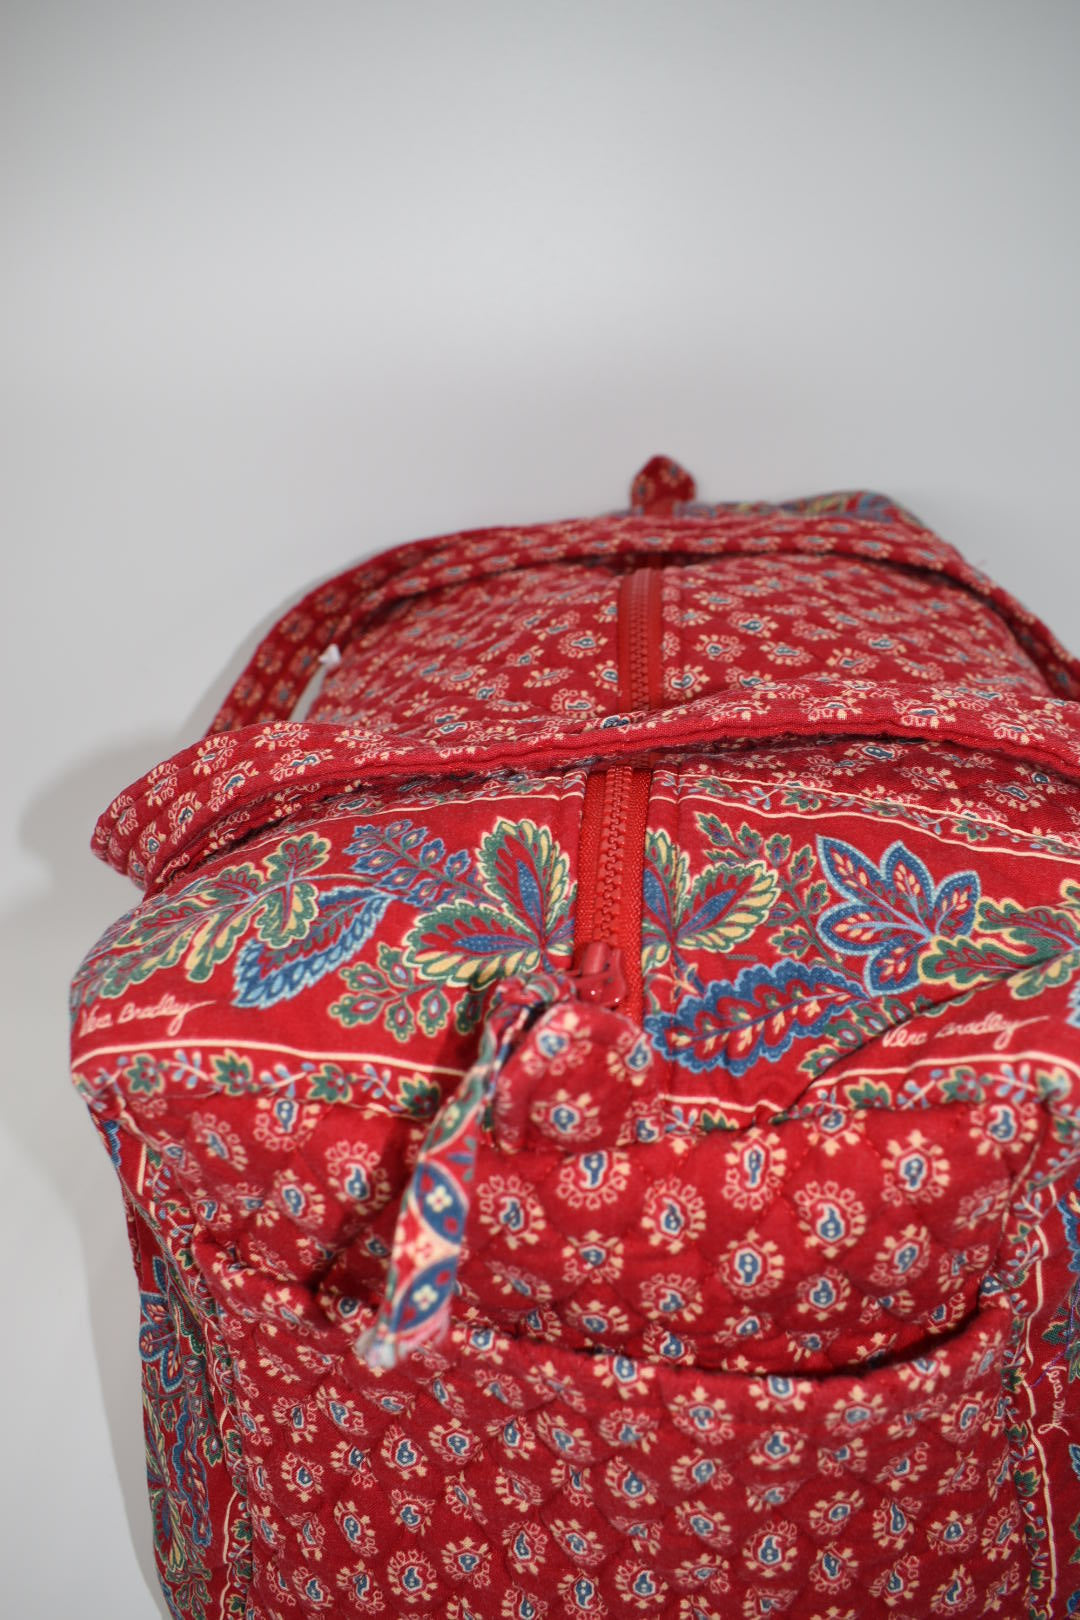 Vera Bradley Large Duffel Bag in "Classic Red-1998" Pattern